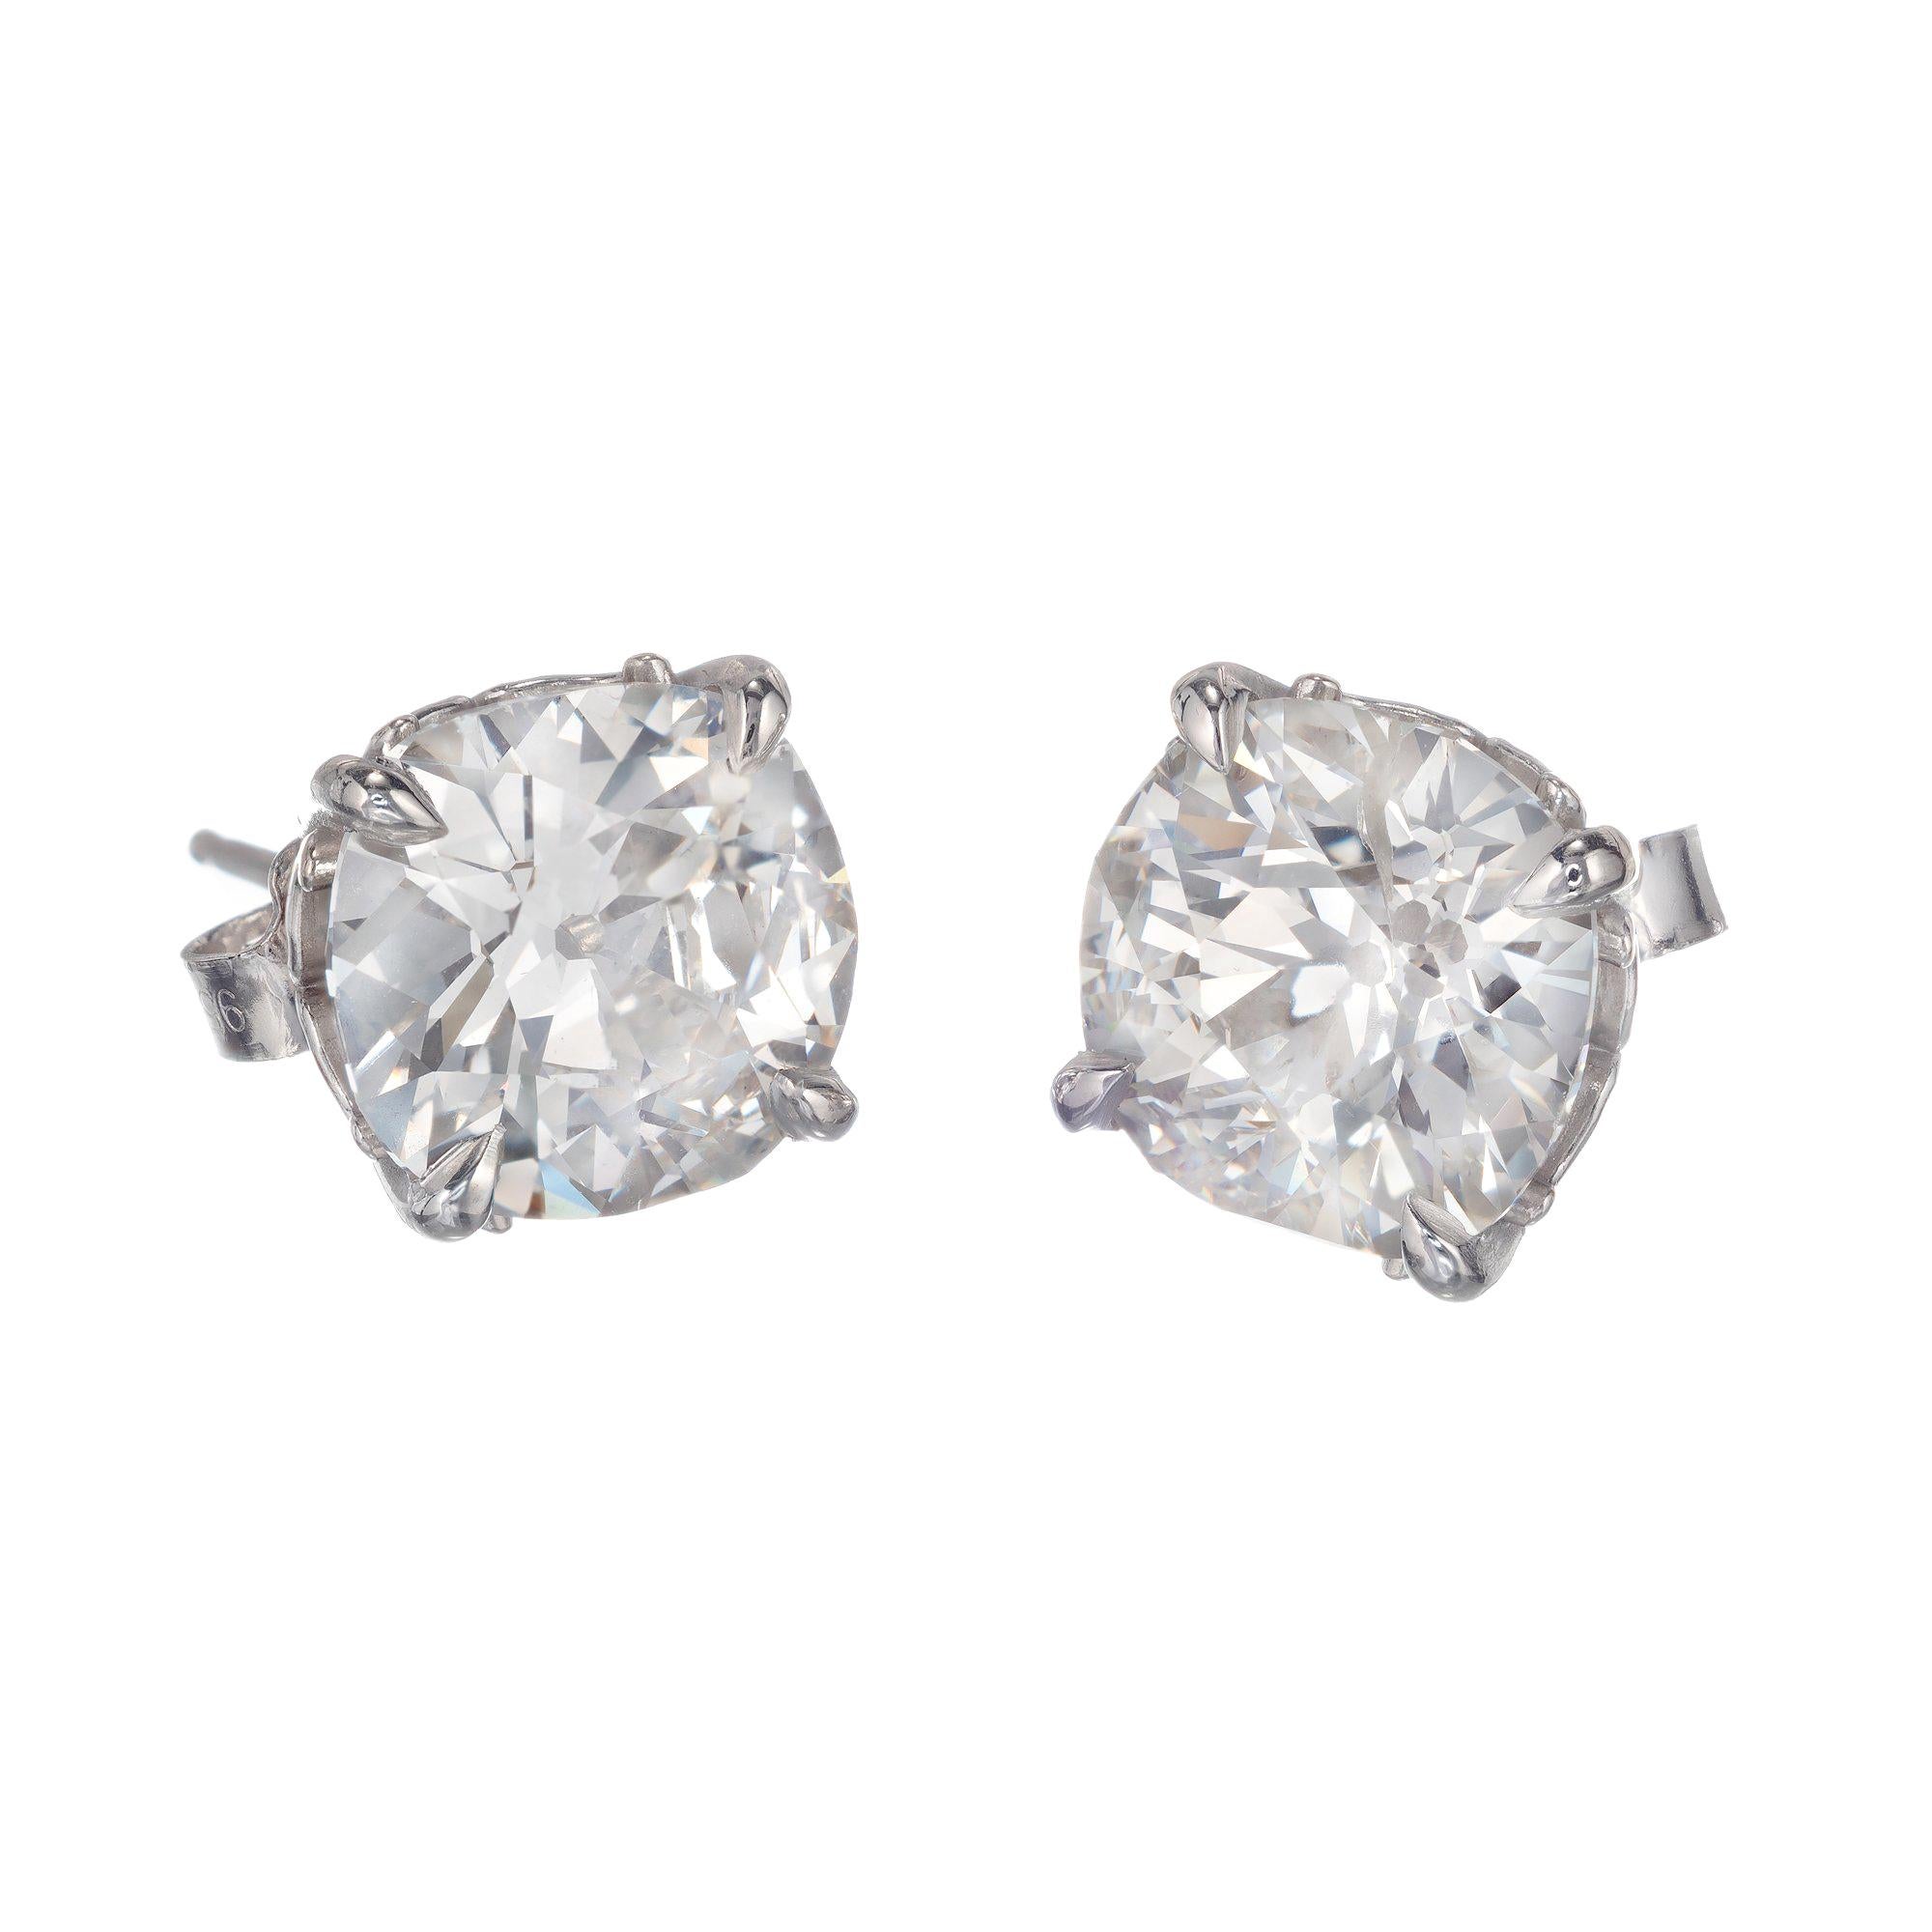 Peter Suchy GIA Certified 4.29 Carat Diamond Platinum Stud Earrings